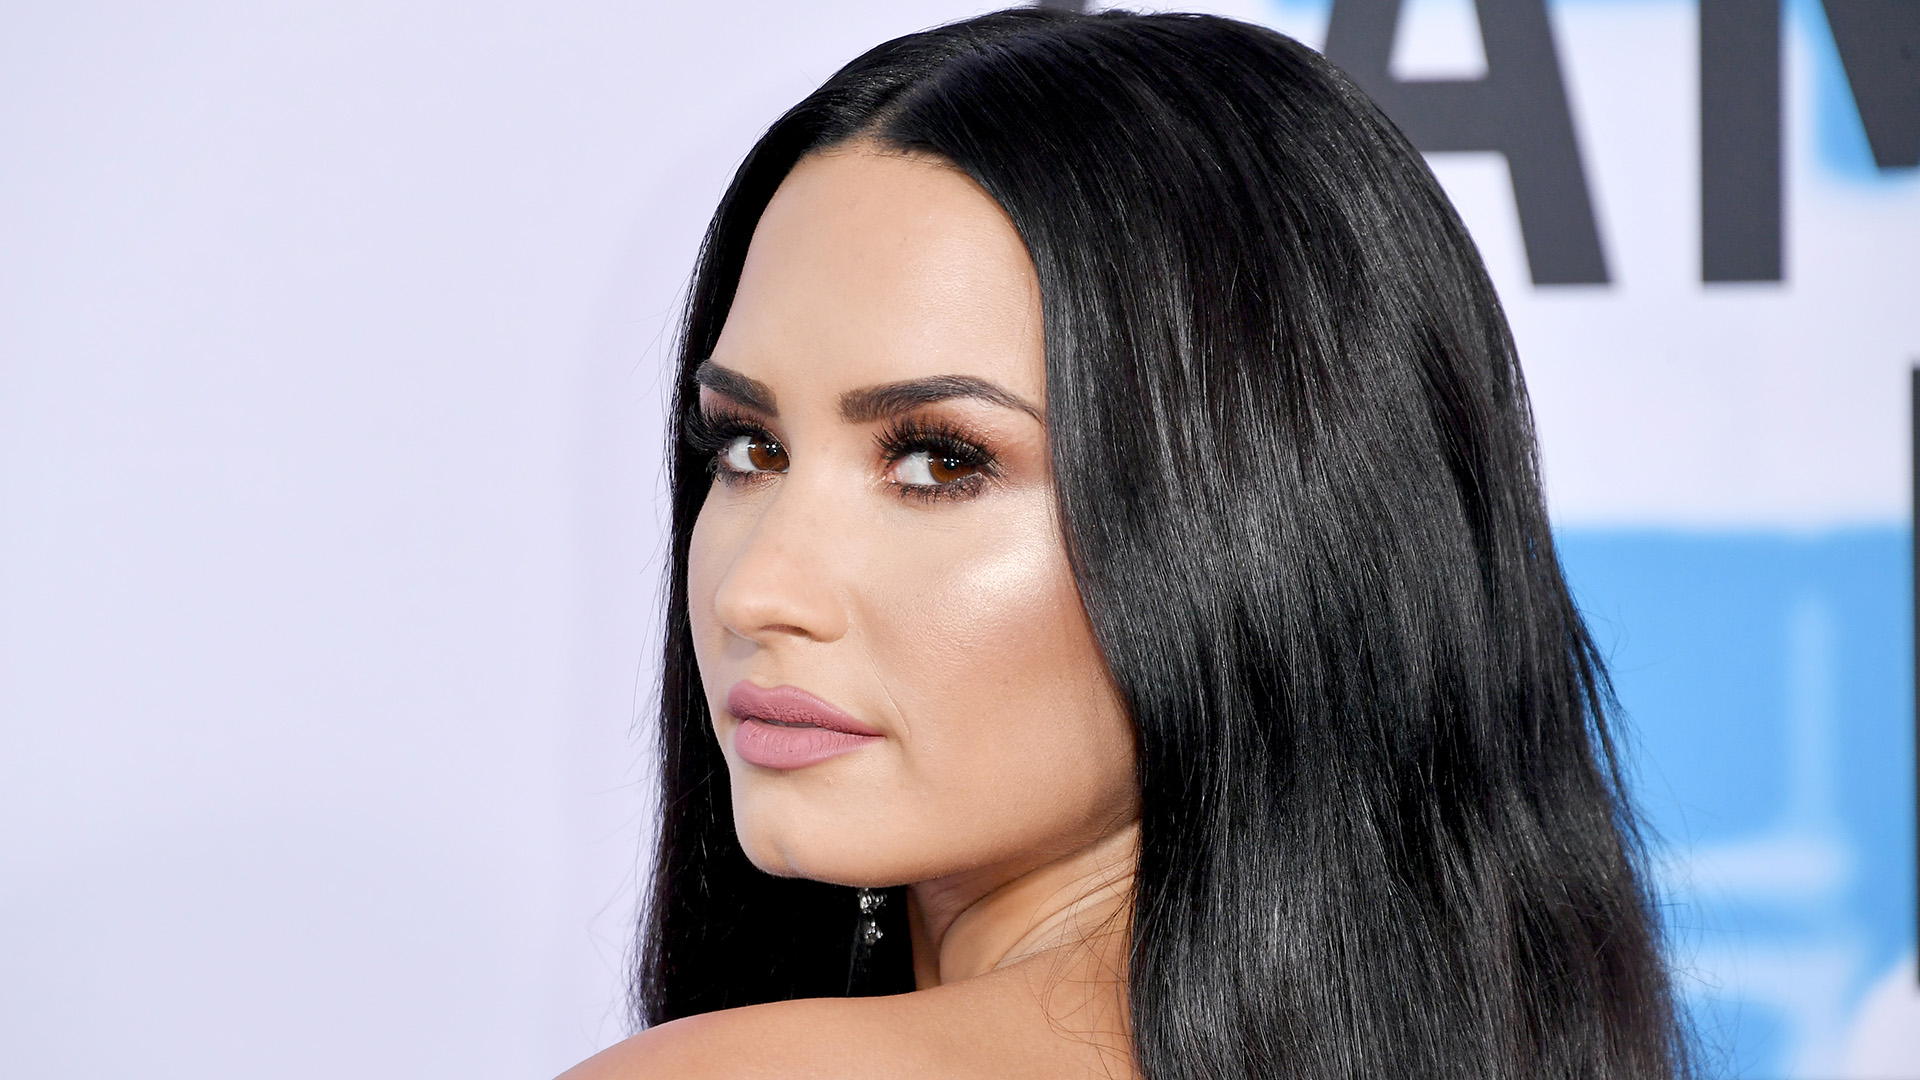 Demi Lovato genera polémica por kilos extra